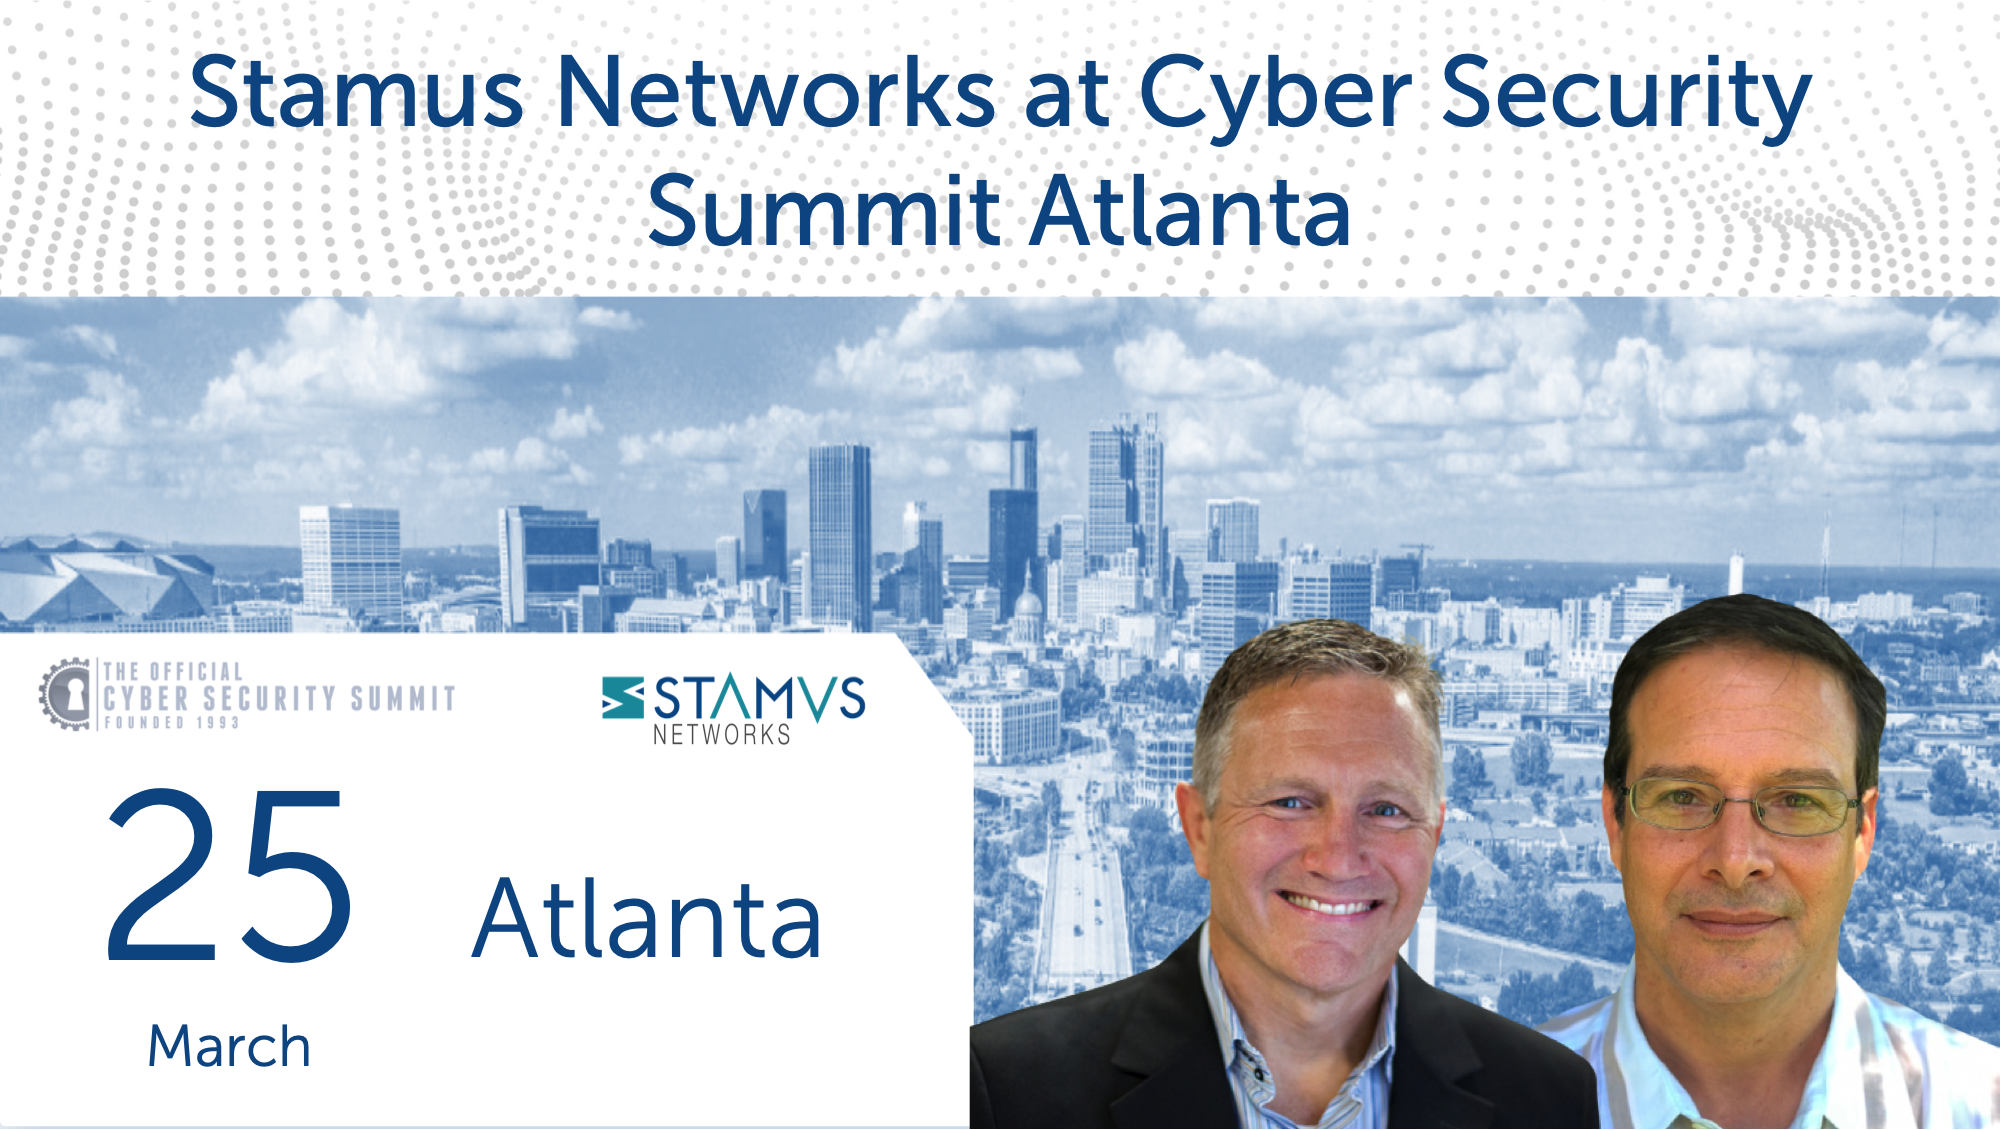 Stamus Networks at Cyber Security Summit Atlanta